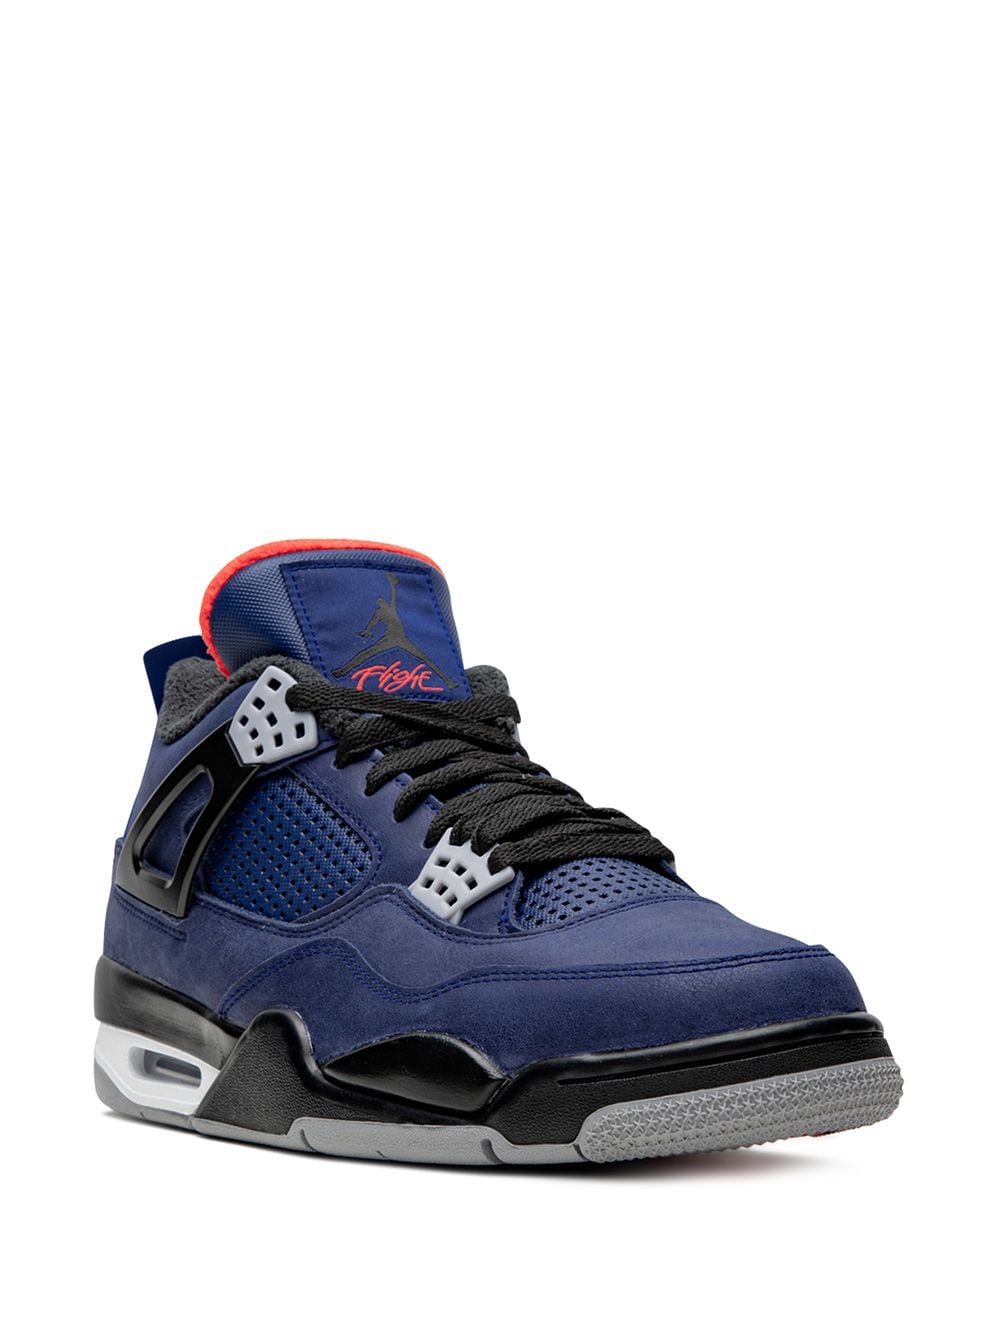 Loyal Blue Sneakers